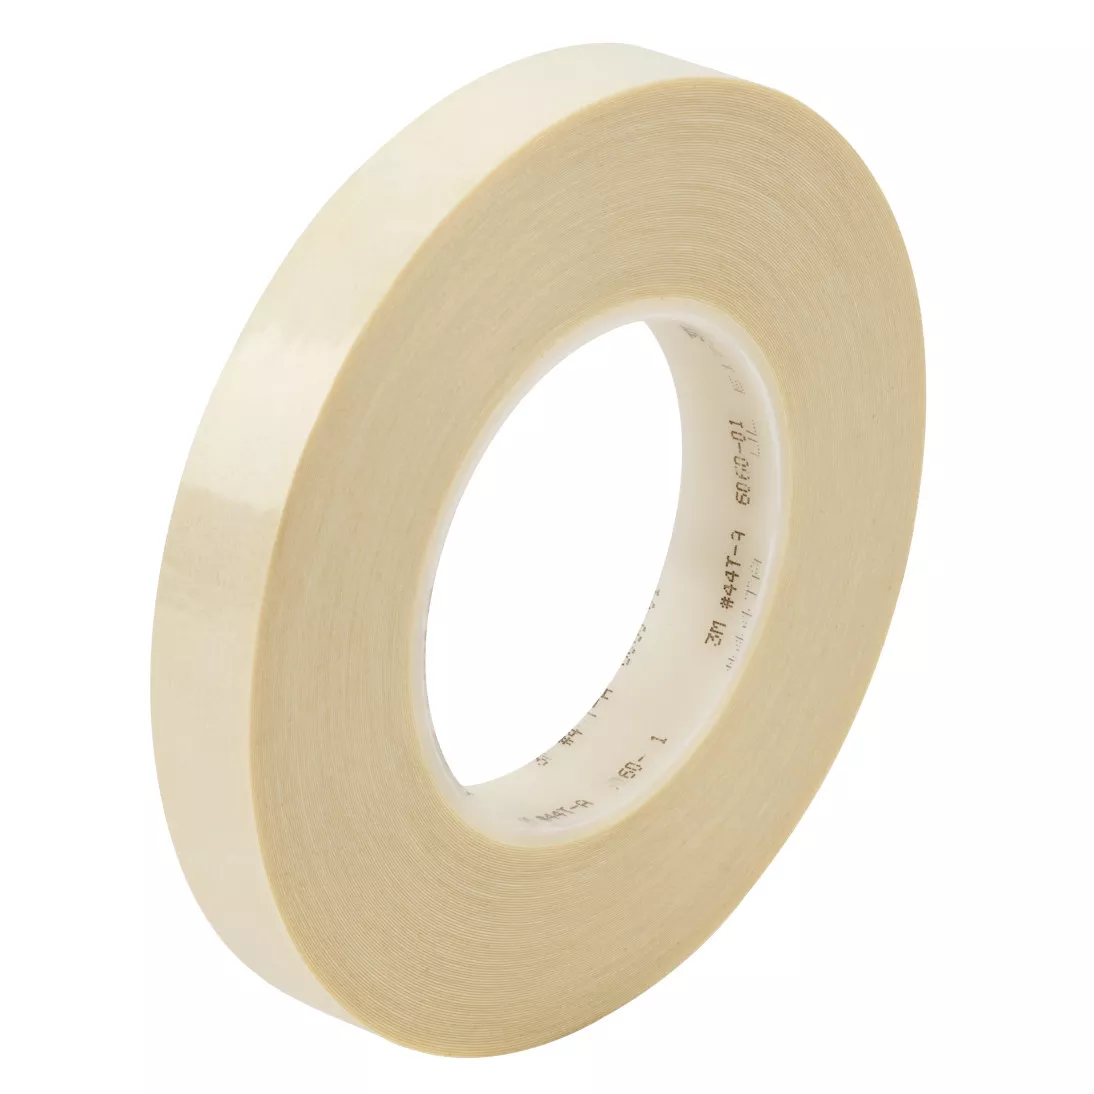 3M™ Composite Film Electrical Tape 44T-A, Margin Tape Log, 46 in x 32.8
yd, plastic core, 1 Roll/Case